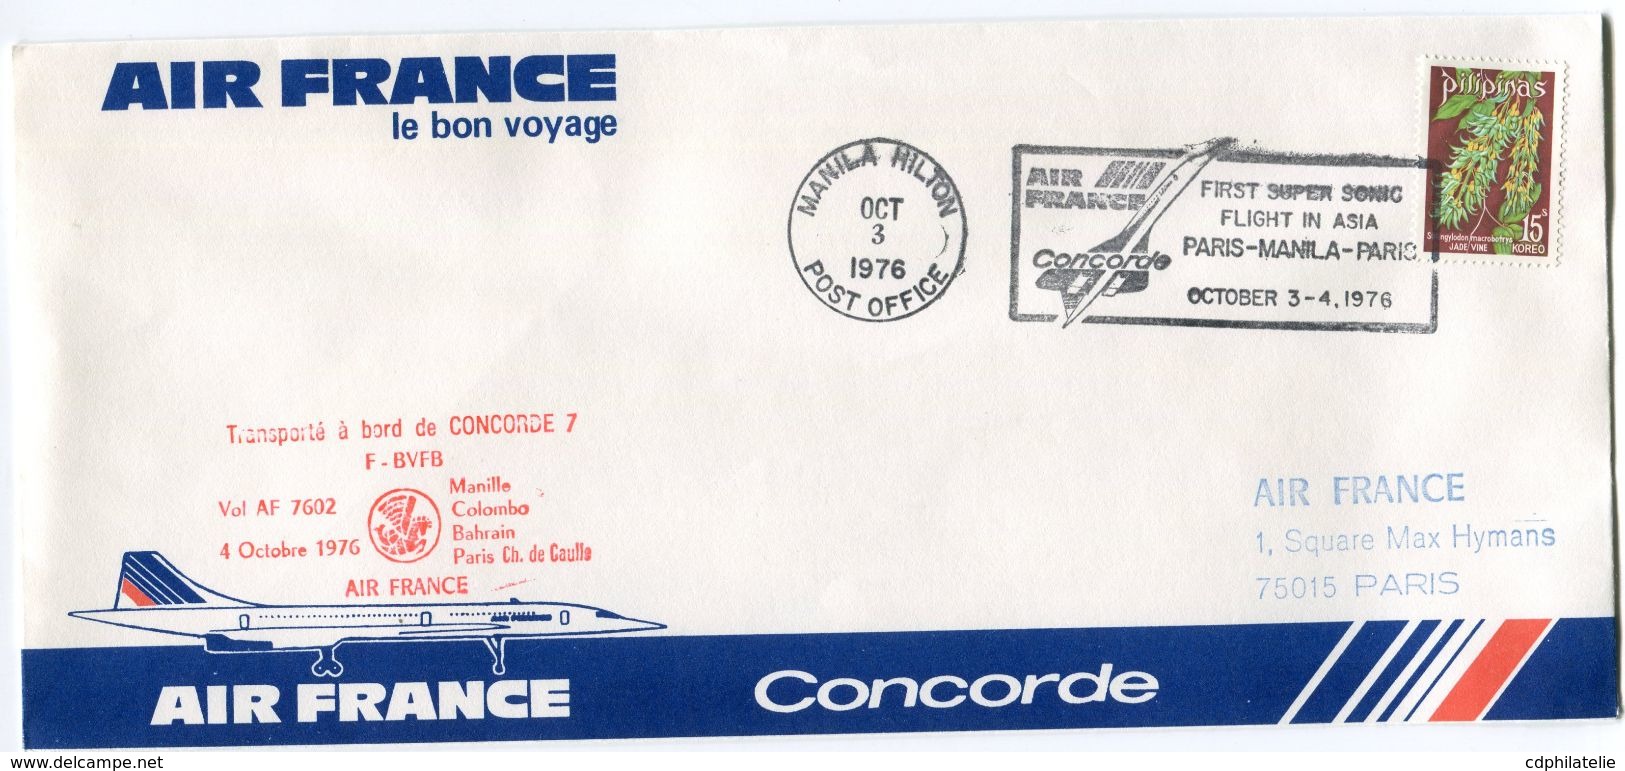 ENVELOPPE CONCORDE 7 VOL AF 7602 MANILLE/COLOMBO/BAHRAIN/PARIS CH. DE GAULLE 4 OCTOBRE 1976 - Concorde